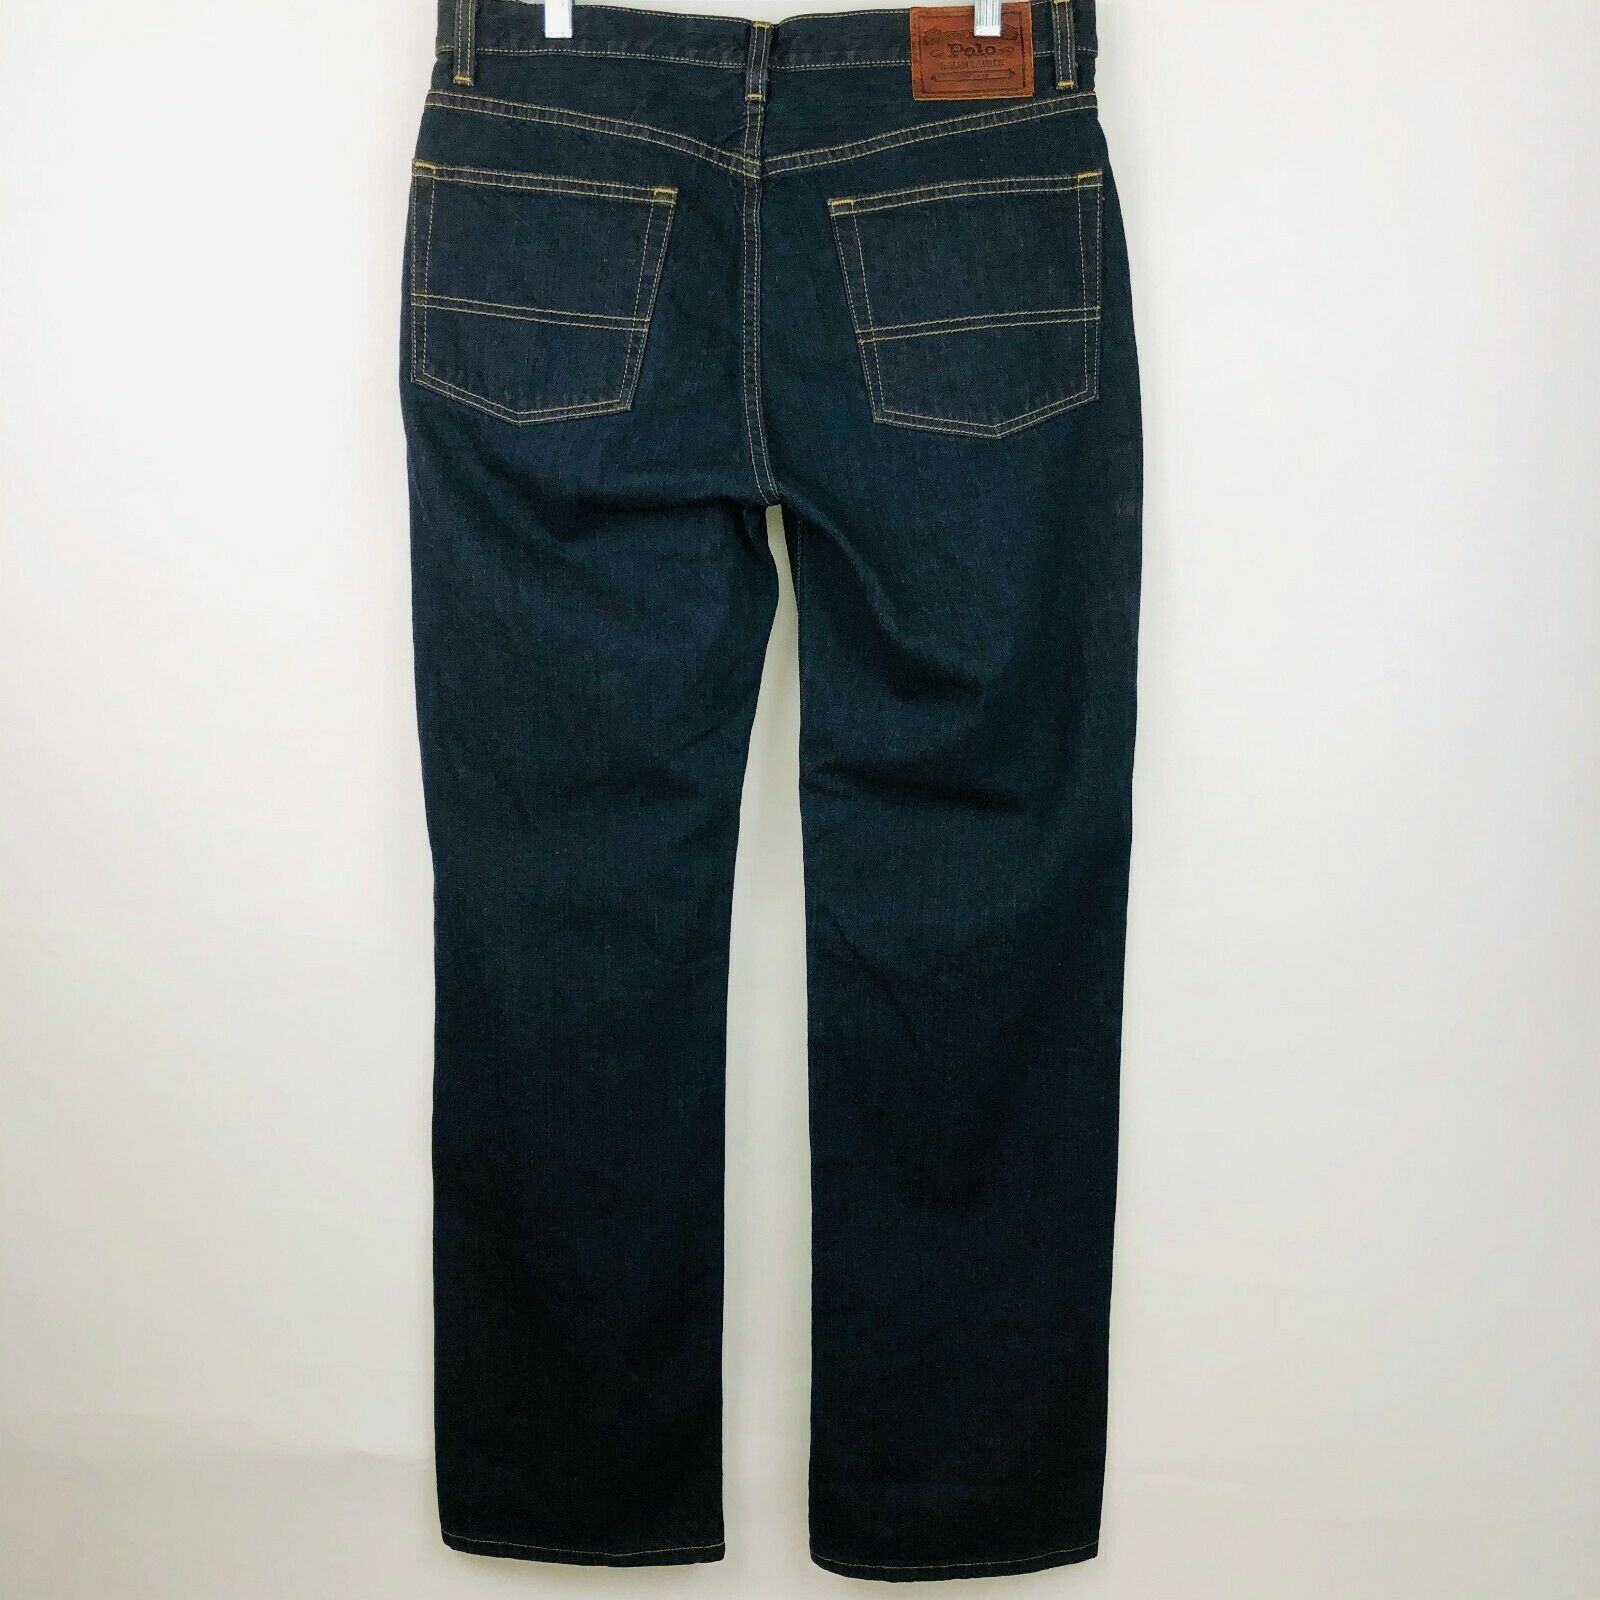 Polo Ralph Lauren Mens Dark Wash Bootcut Jeans M11 W 33 x 32 - Jeans